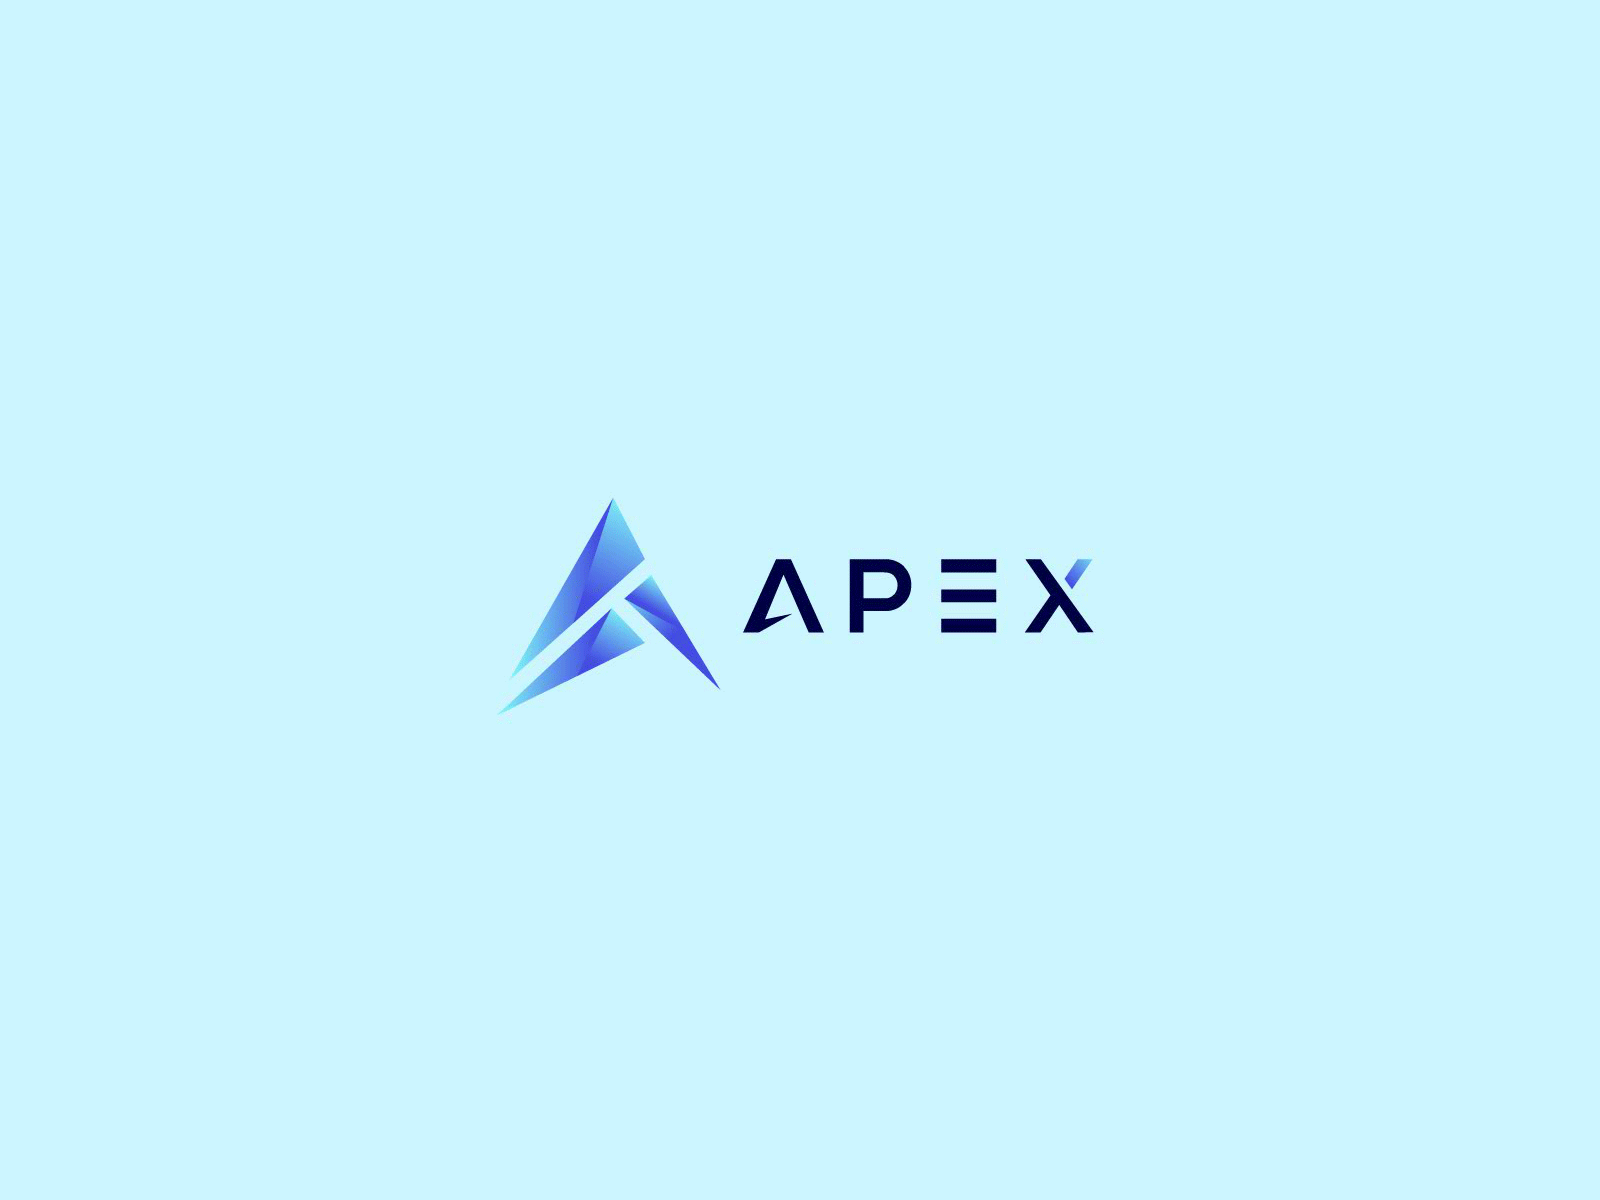 Apex Logo animation animations apex apex animated logo apex animation apex design apex logo apex logo design apex logos letter a letter a logo top apex top apex logo top logo